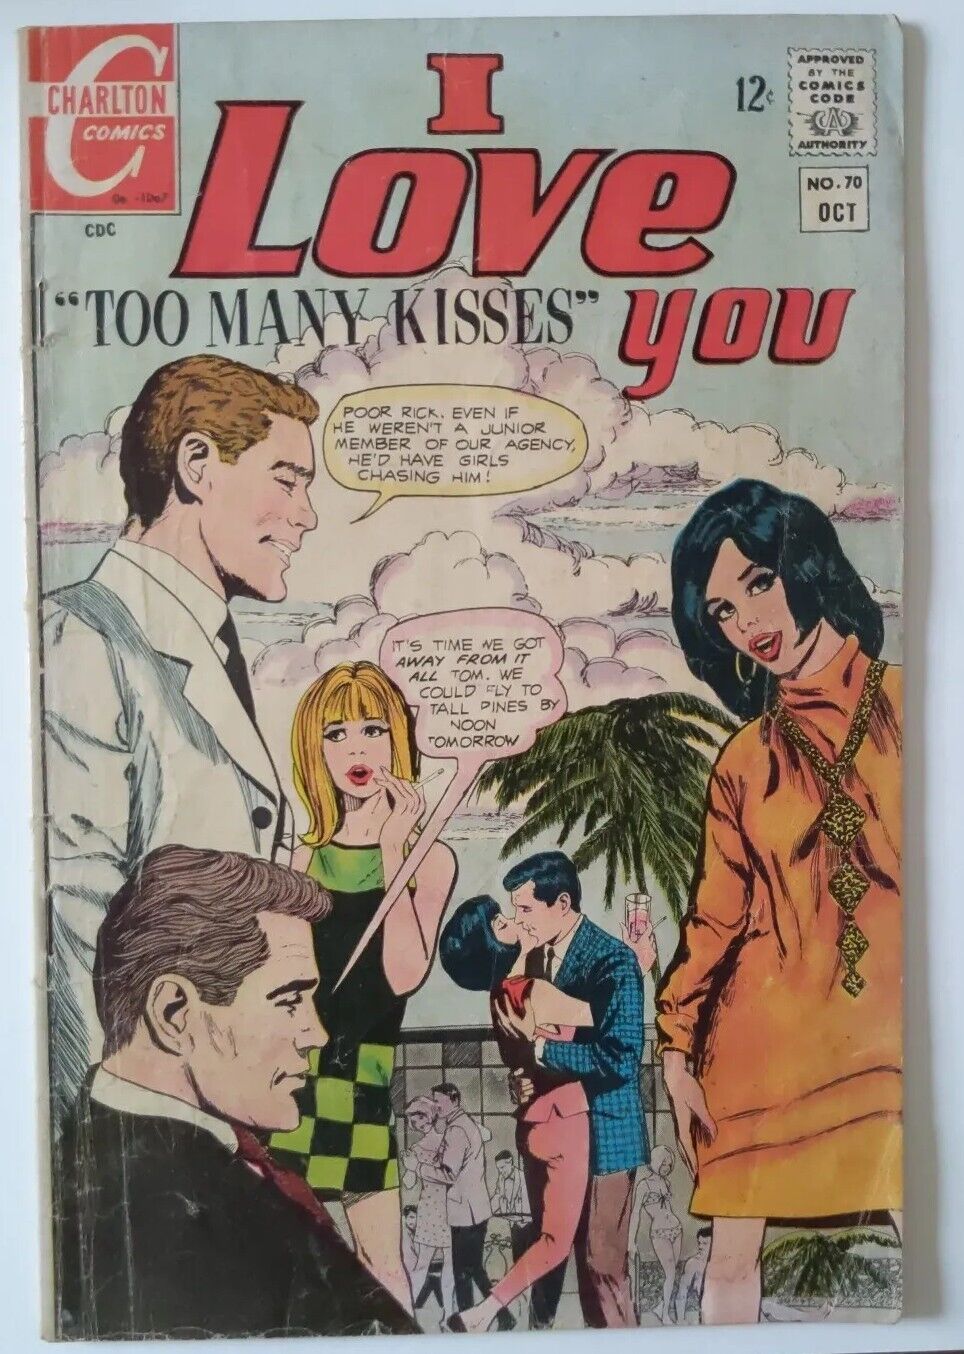 I Love You #70 - Silver Age Charlton Romance Too Many Kisses - 1967